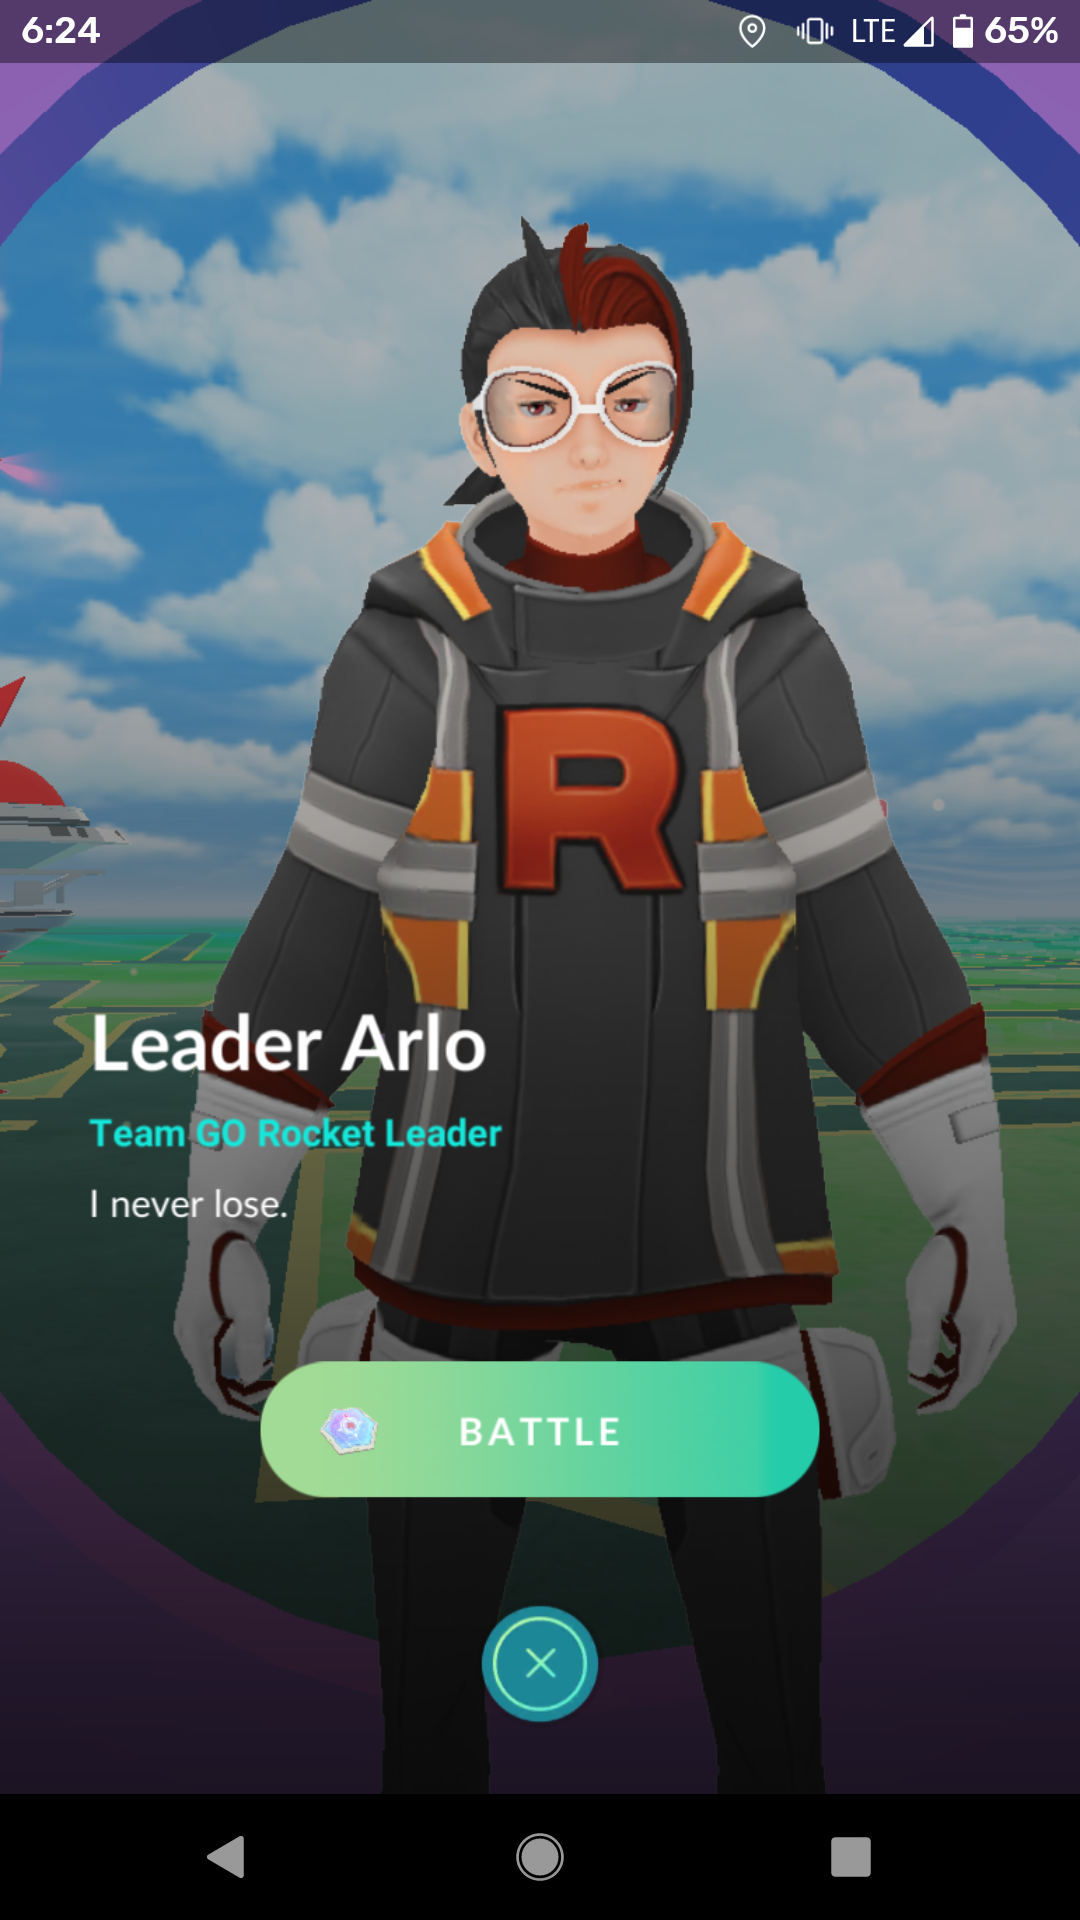 How to find Team GO Rocket Leader Arlo in Pokemon GO